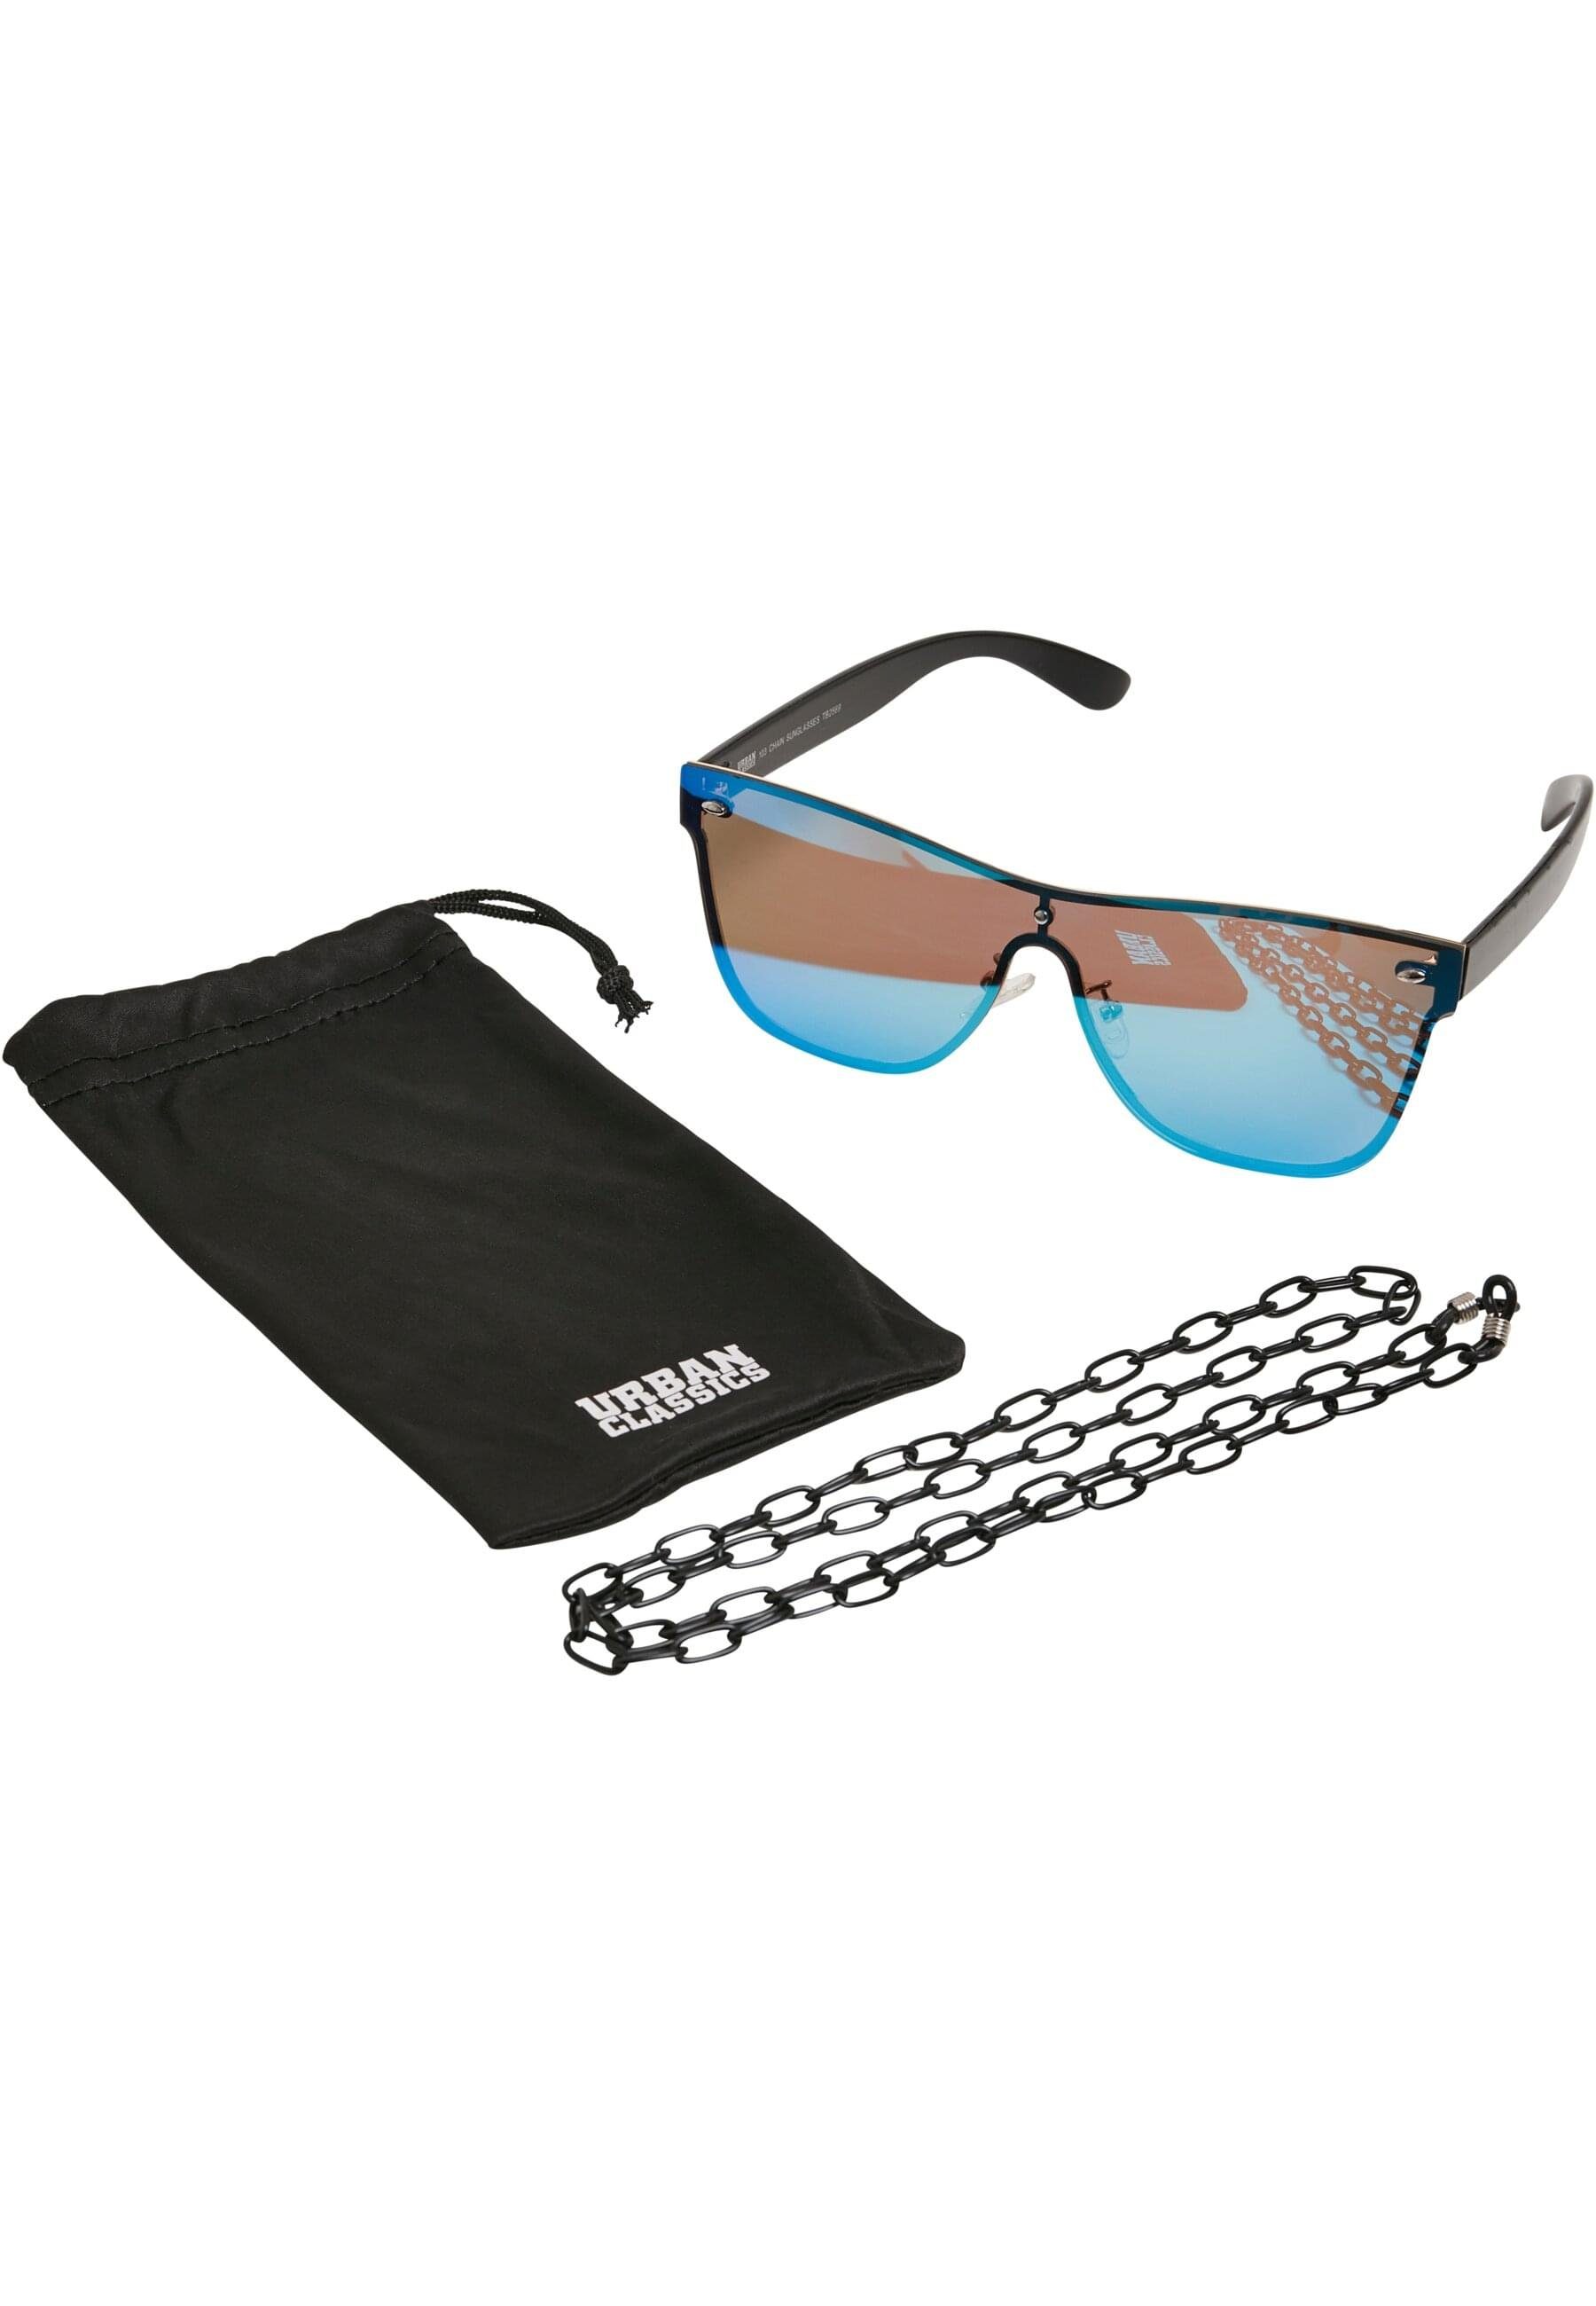 URBAN CLASSICS Chain Sonnenbrille Unisex Sunglasses 103 blk/blue